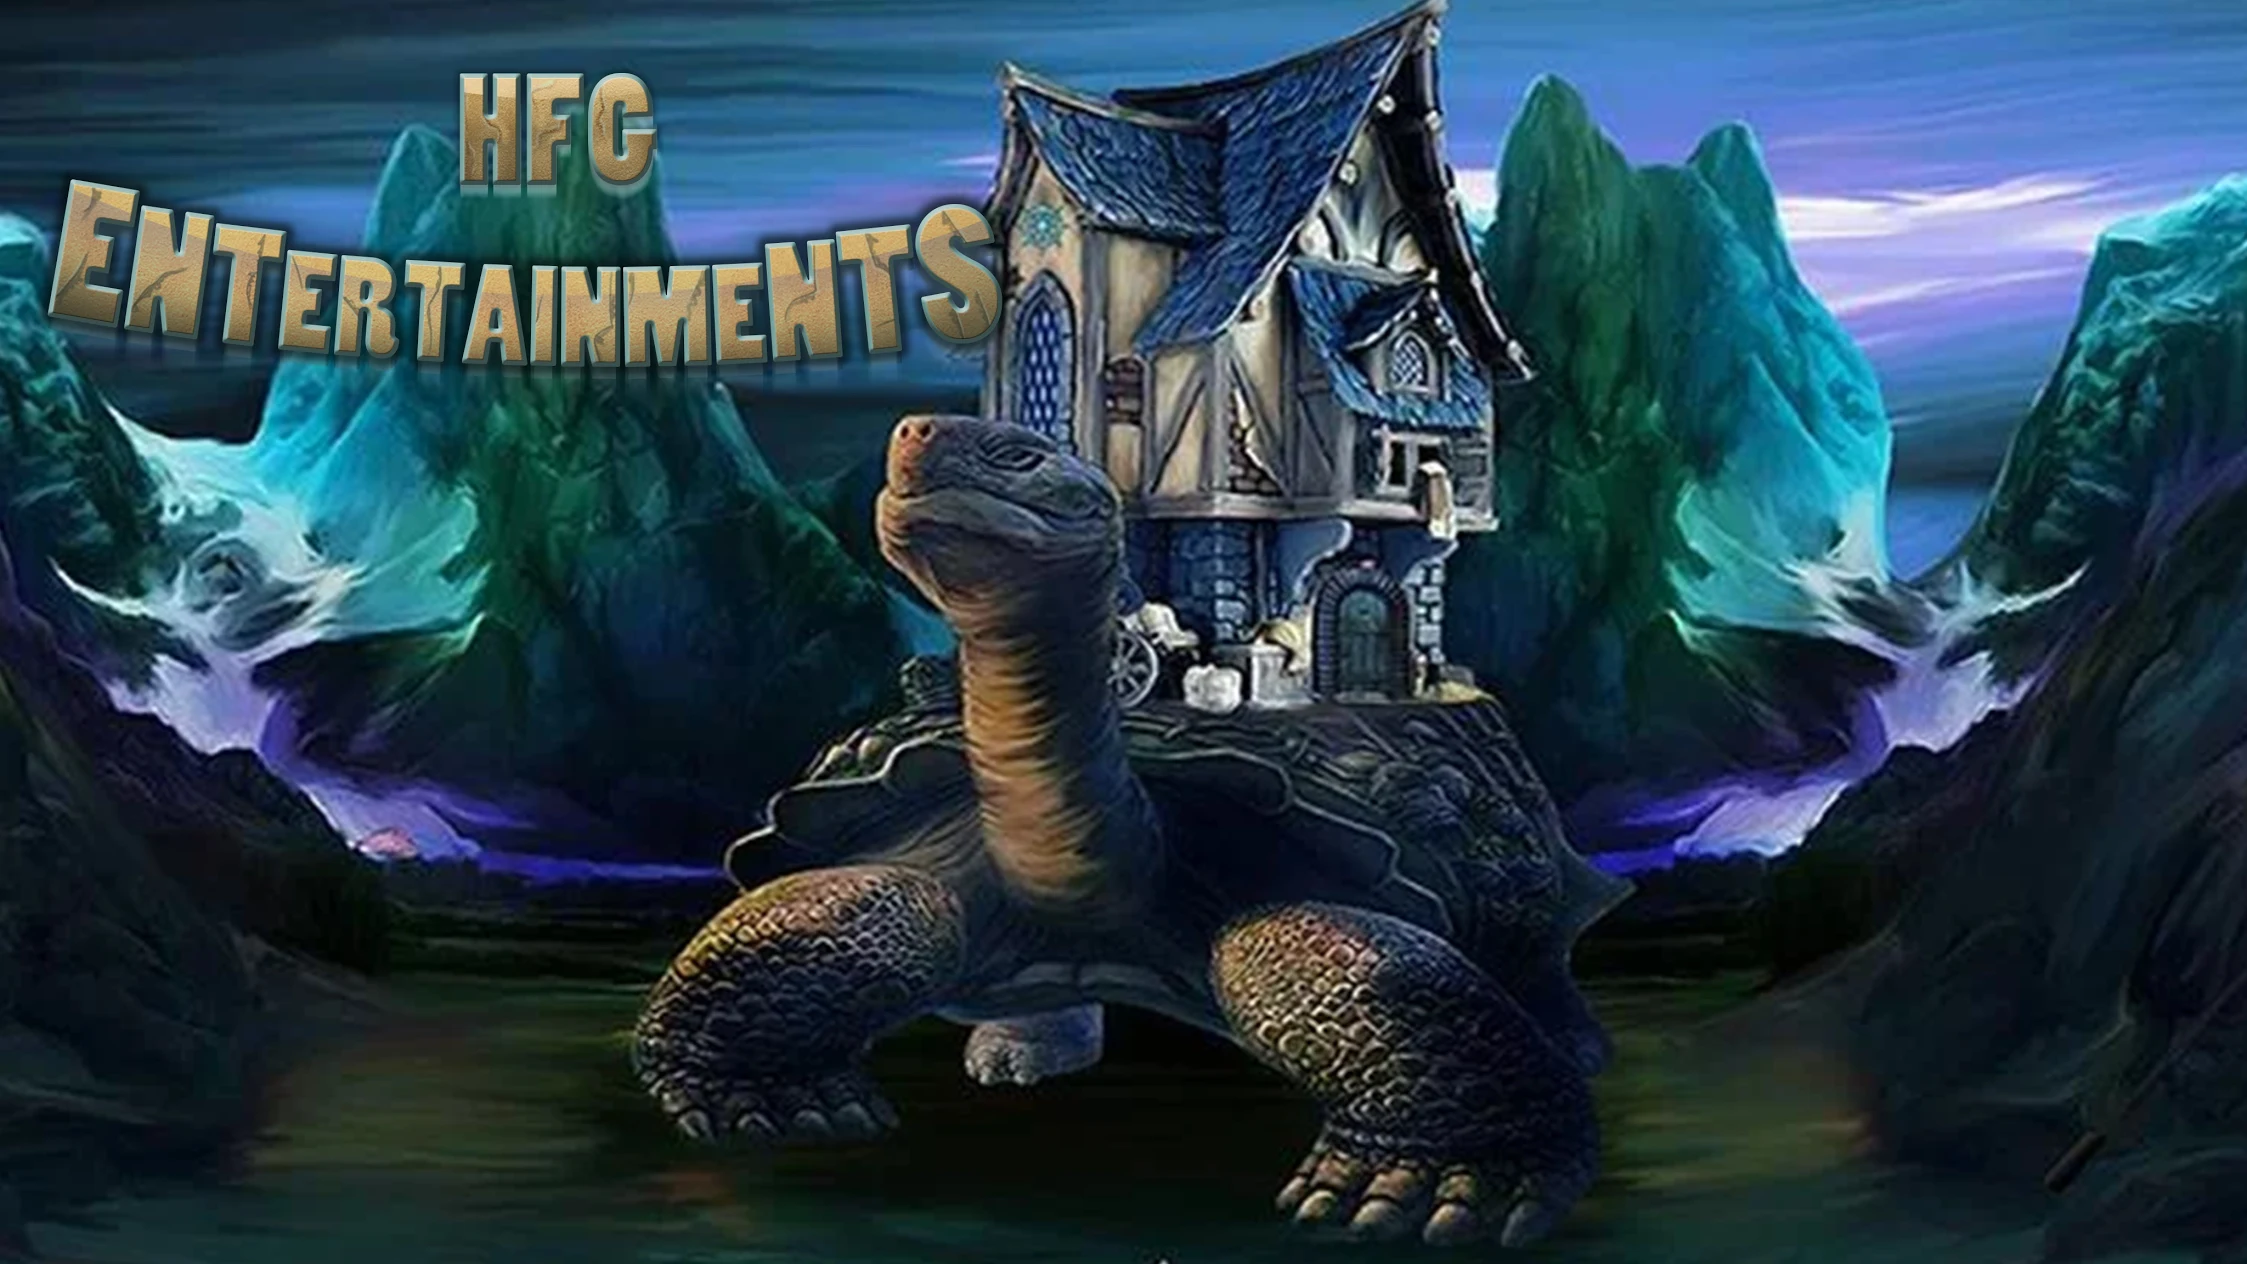 HFG Entertainments